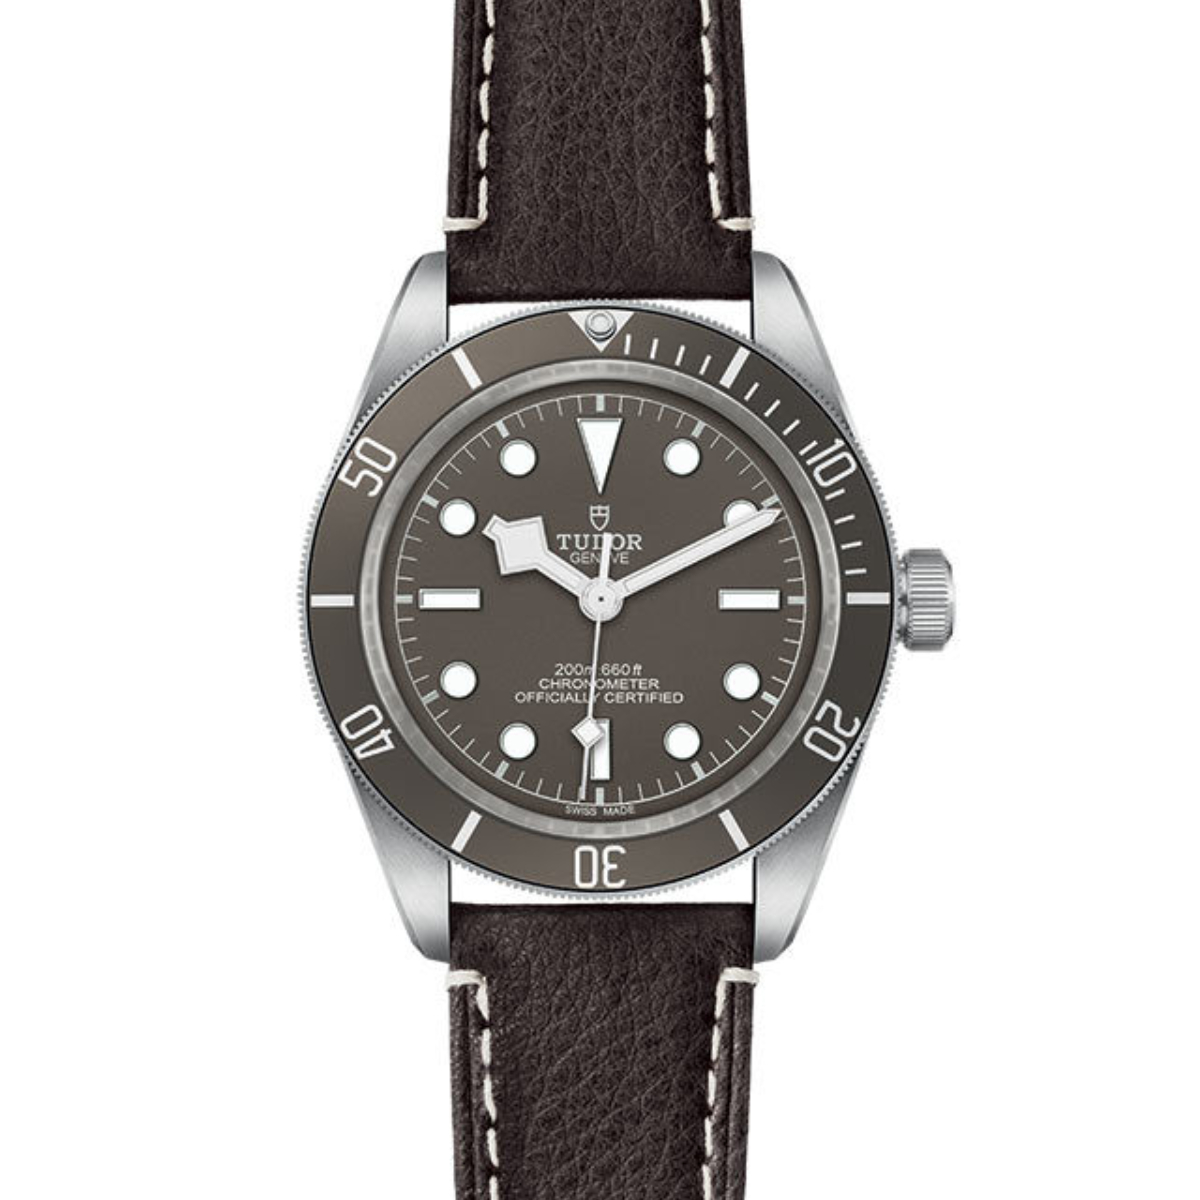 Rolex Tudor Black Bay Automatic No Date Mens watch 79010SG0001